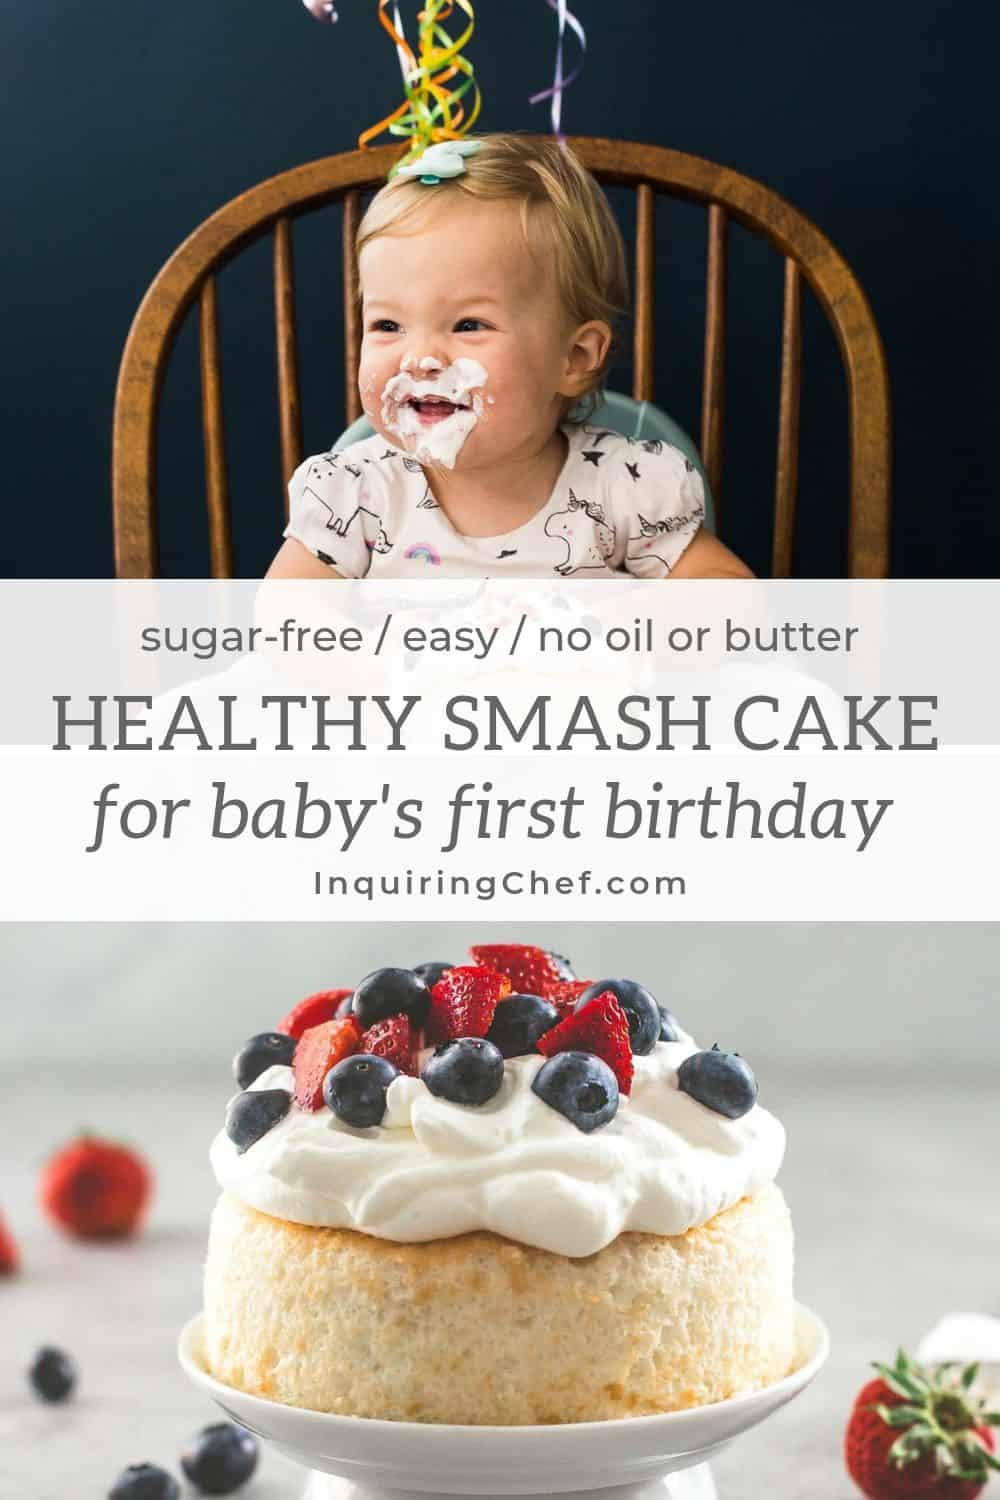 Healthy Smash Cake Recipe 1St Birthday
 Healthy Smash Cake for Baby s First Birthday